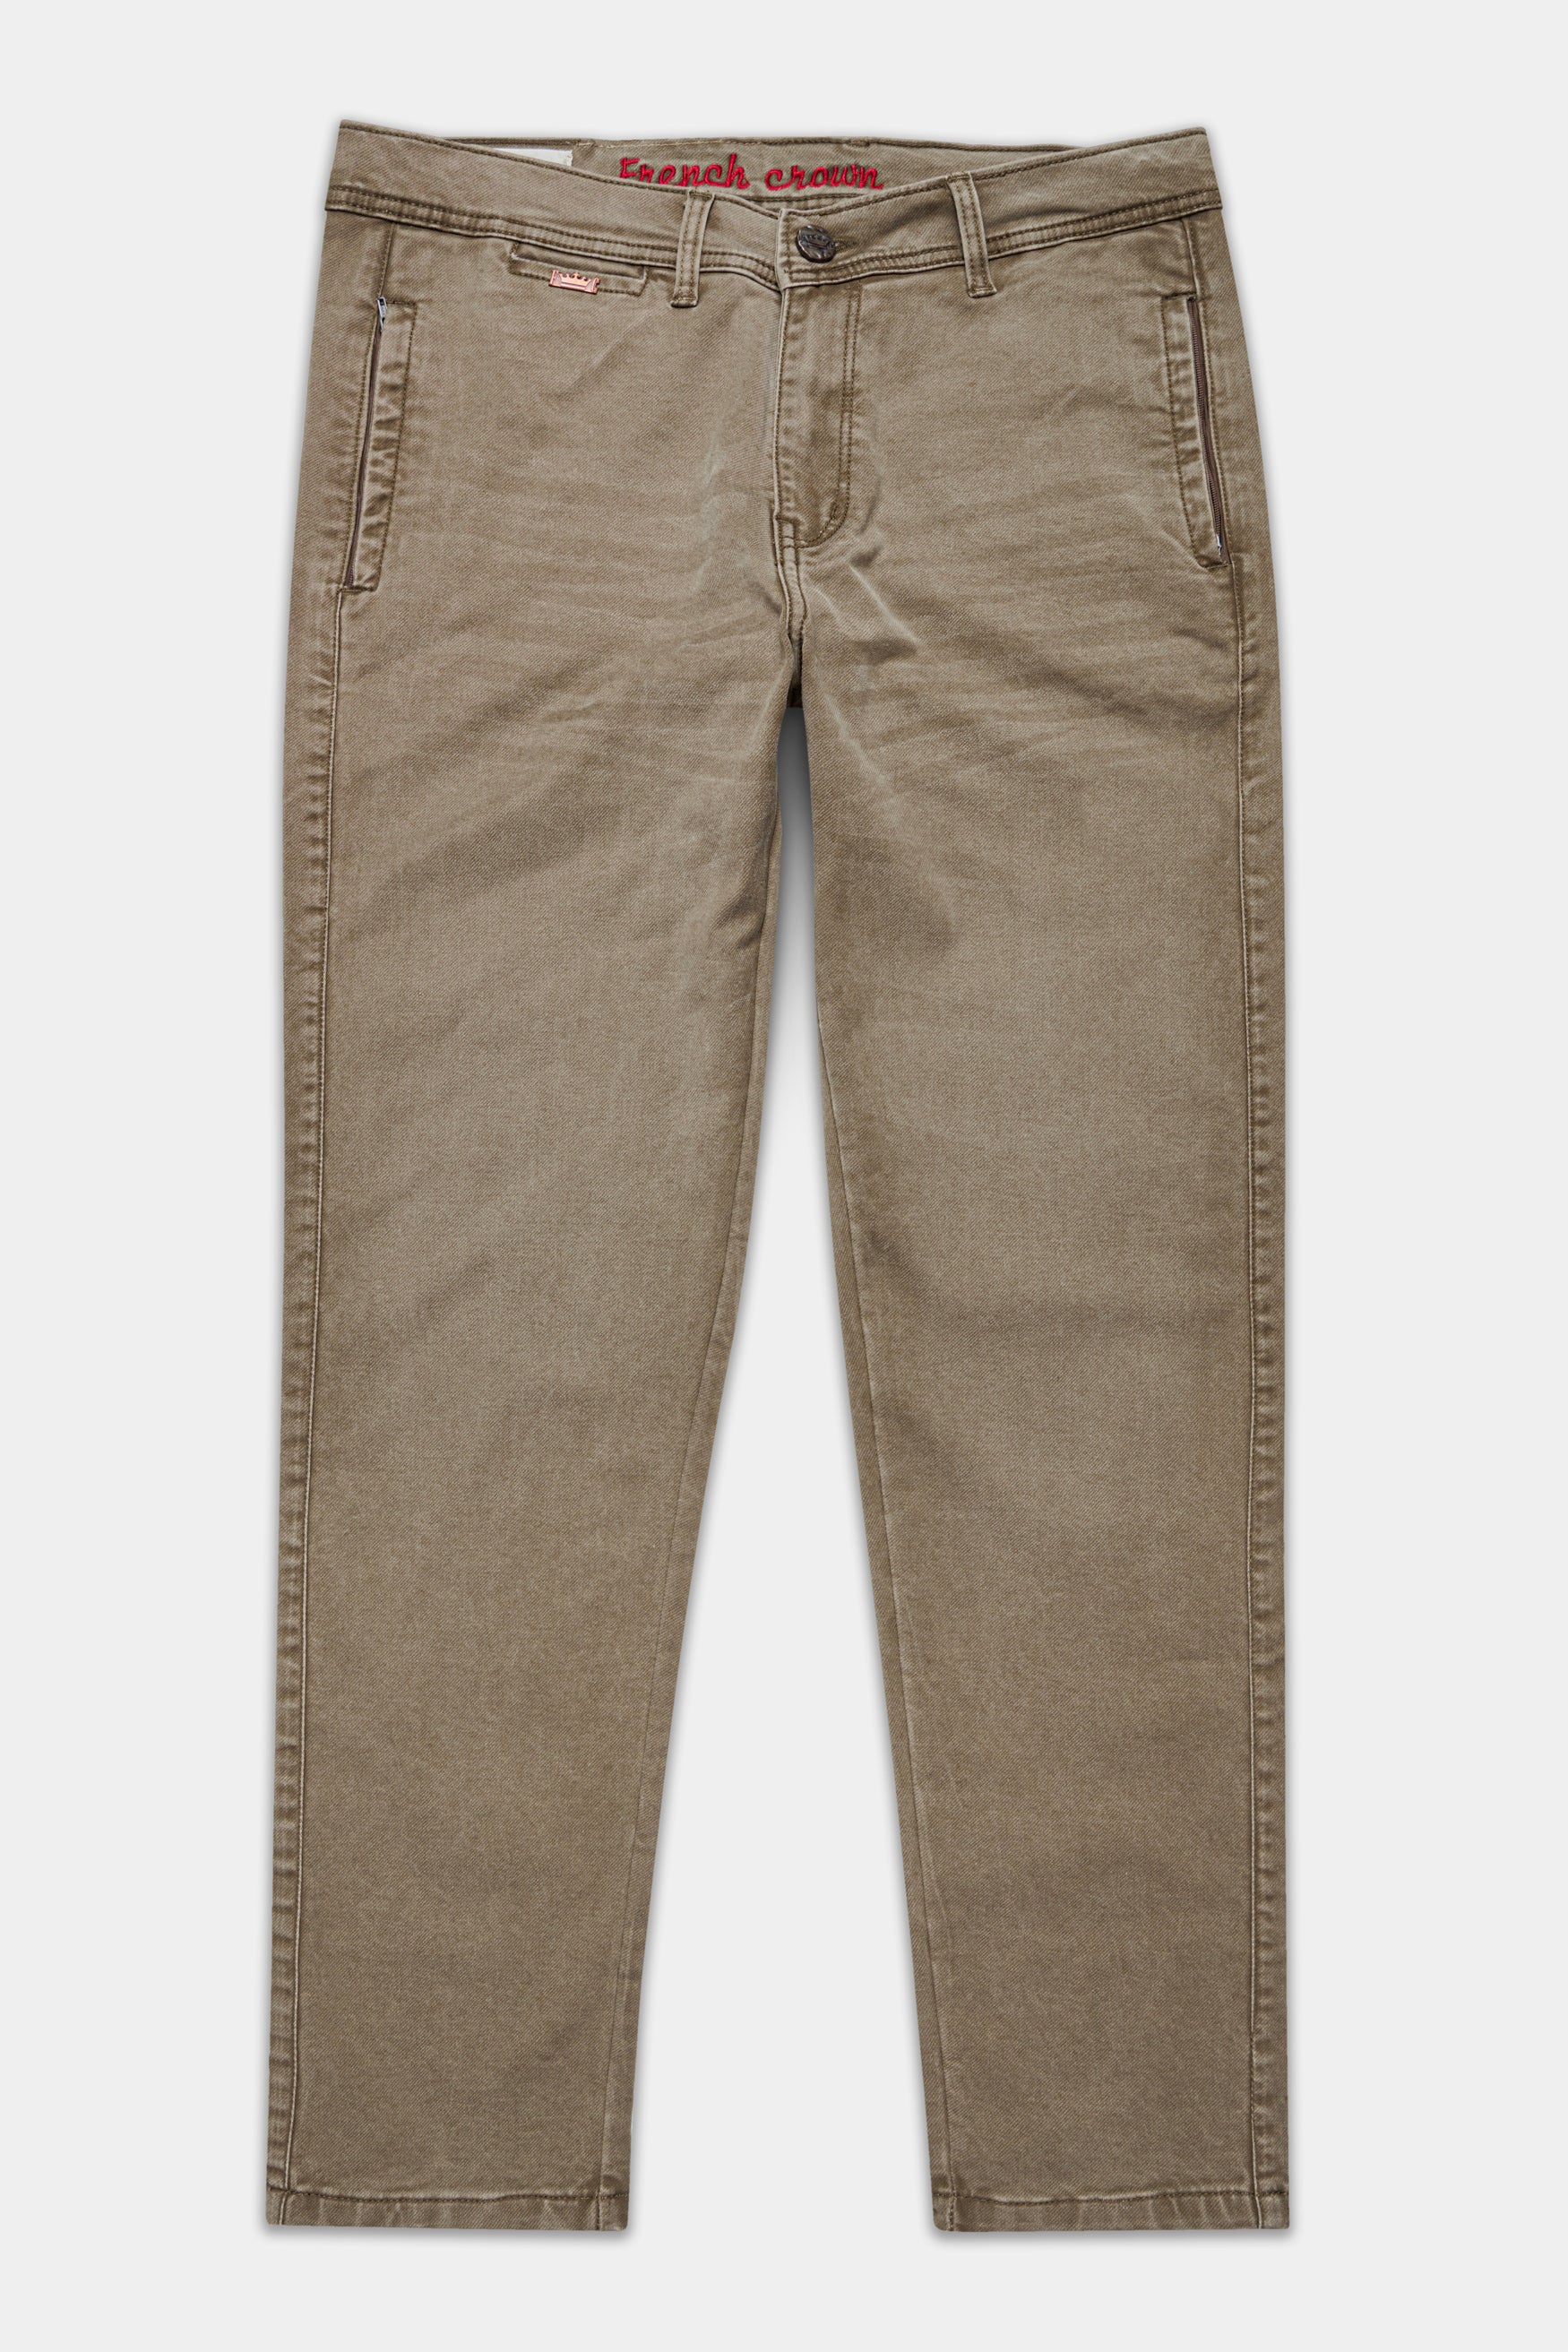 Sandstone Brown with zipper Pockets Whiskering Designer Denim